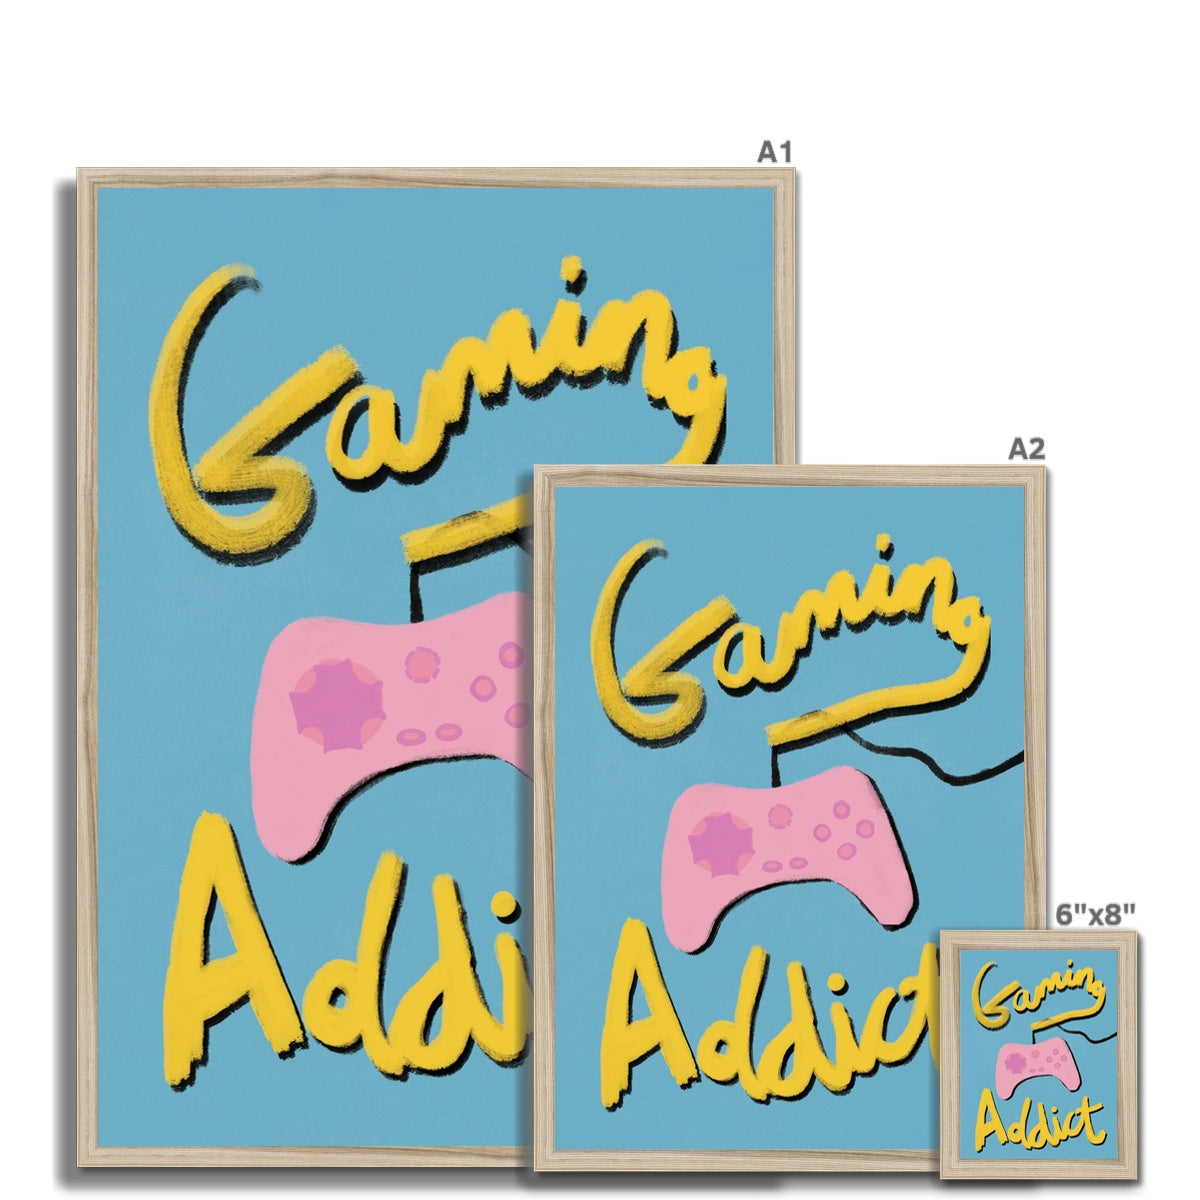 Gaming Addict Print - Blue, Yellow, Pink Framed Print